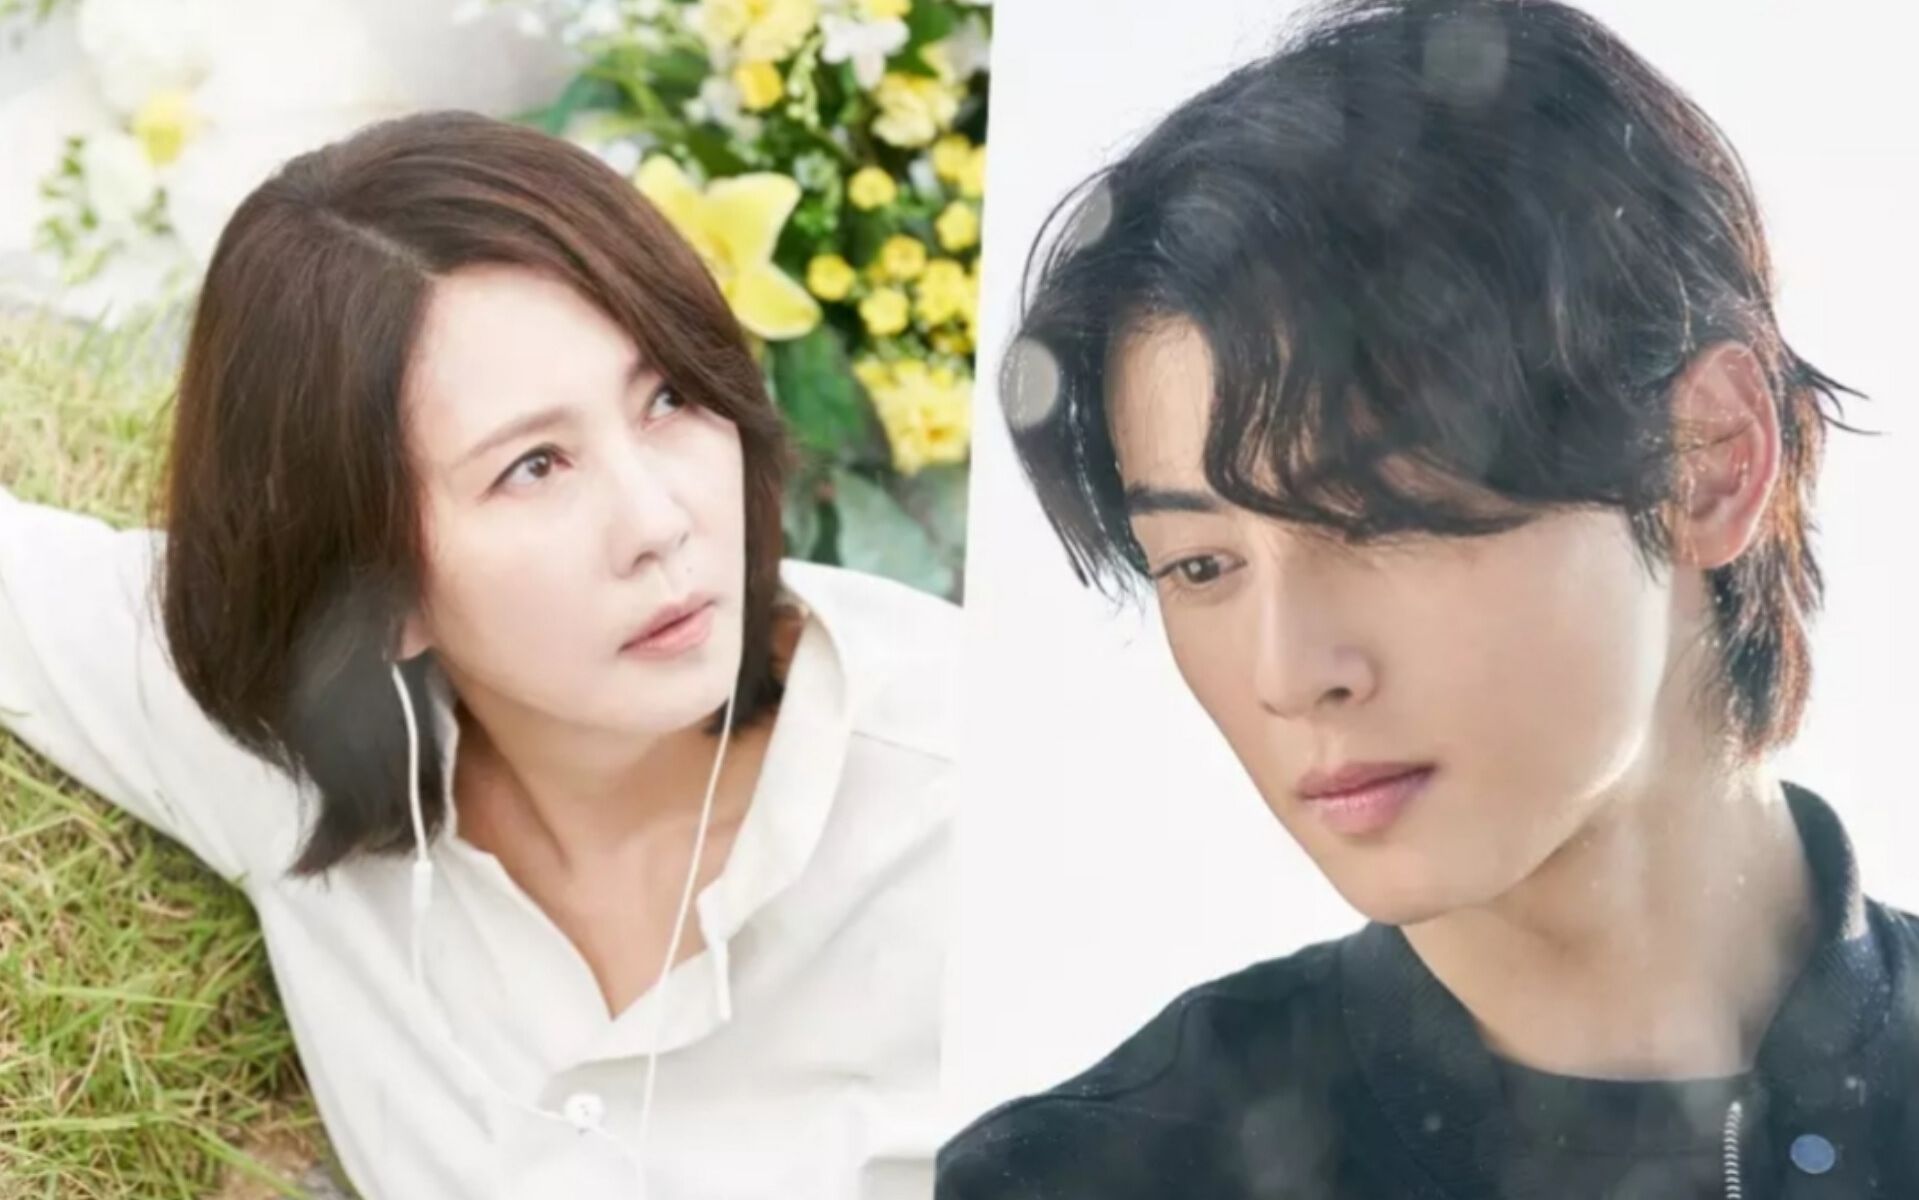 Nonton Wonderful World Episode 1-2 & Spoiler, Cha Eun Woo Secara Dramatis Memasuki Kehidupan Kim Nam Joo